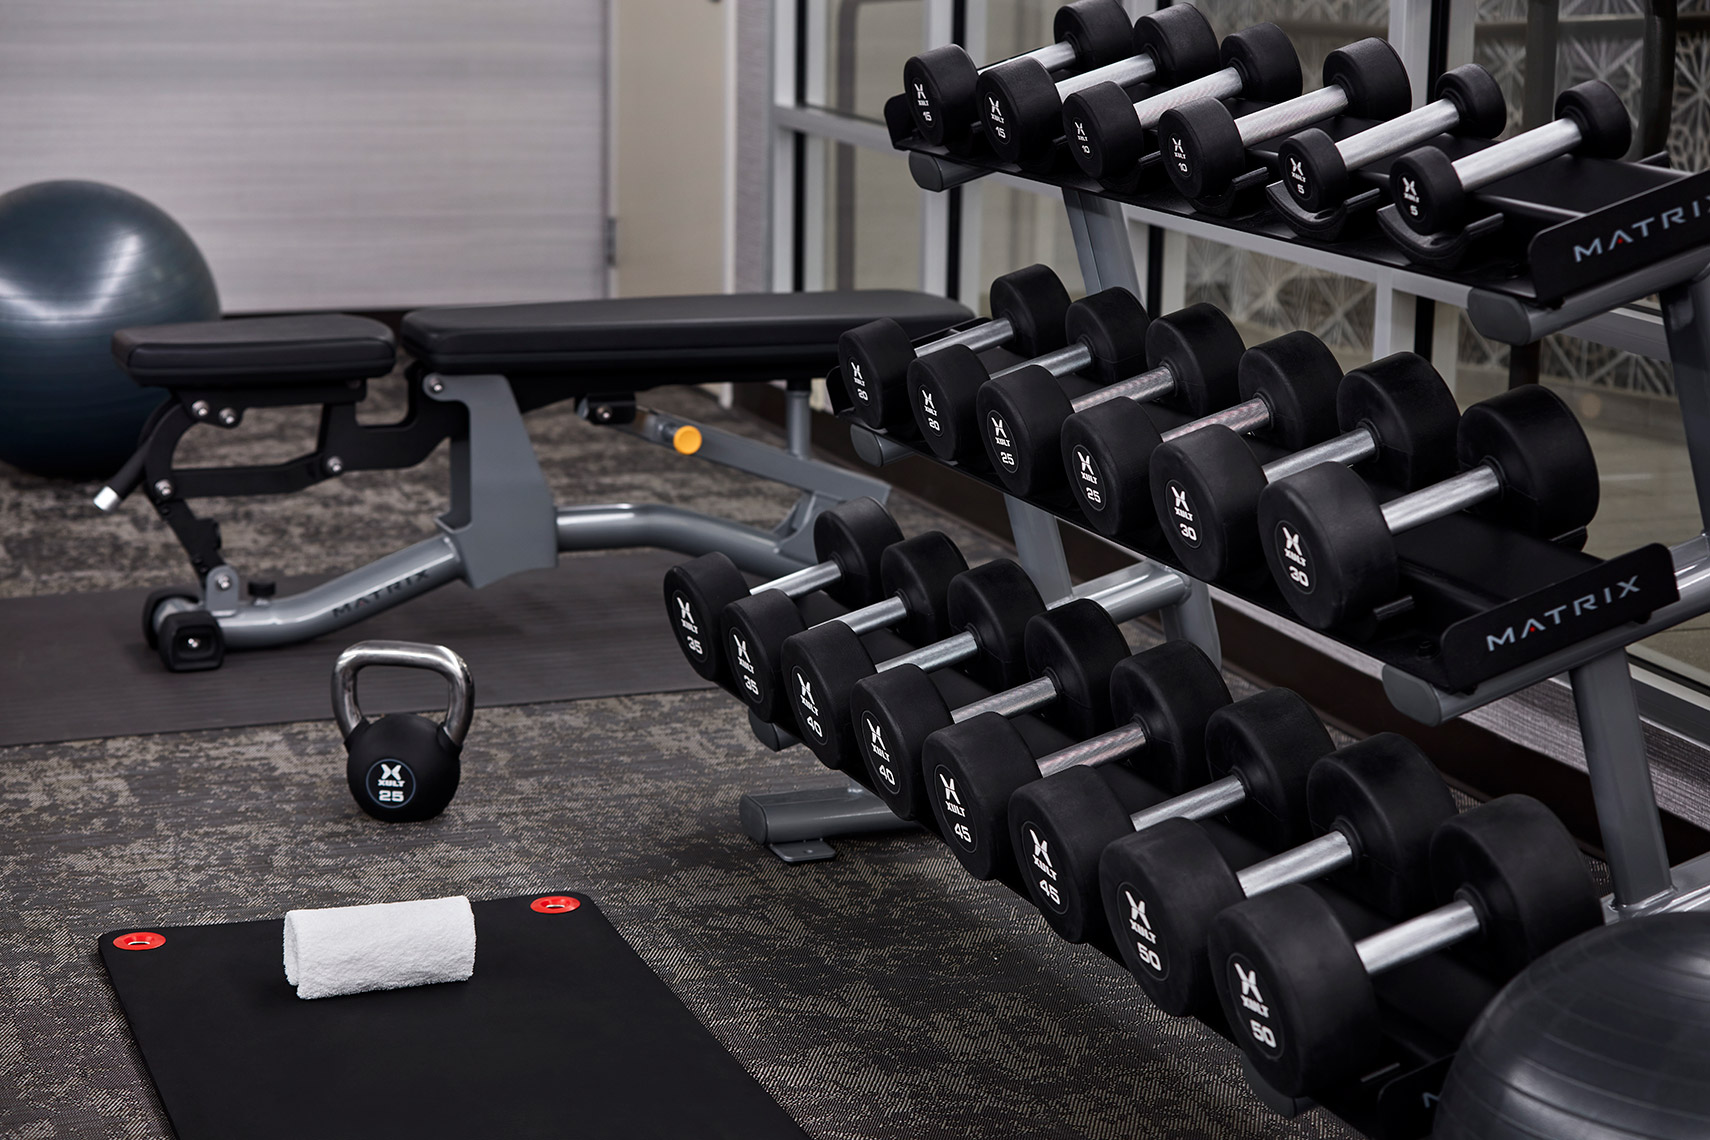 Fairfield Inn & Suites Washington, DC/Downtown - Fitness Center Weights